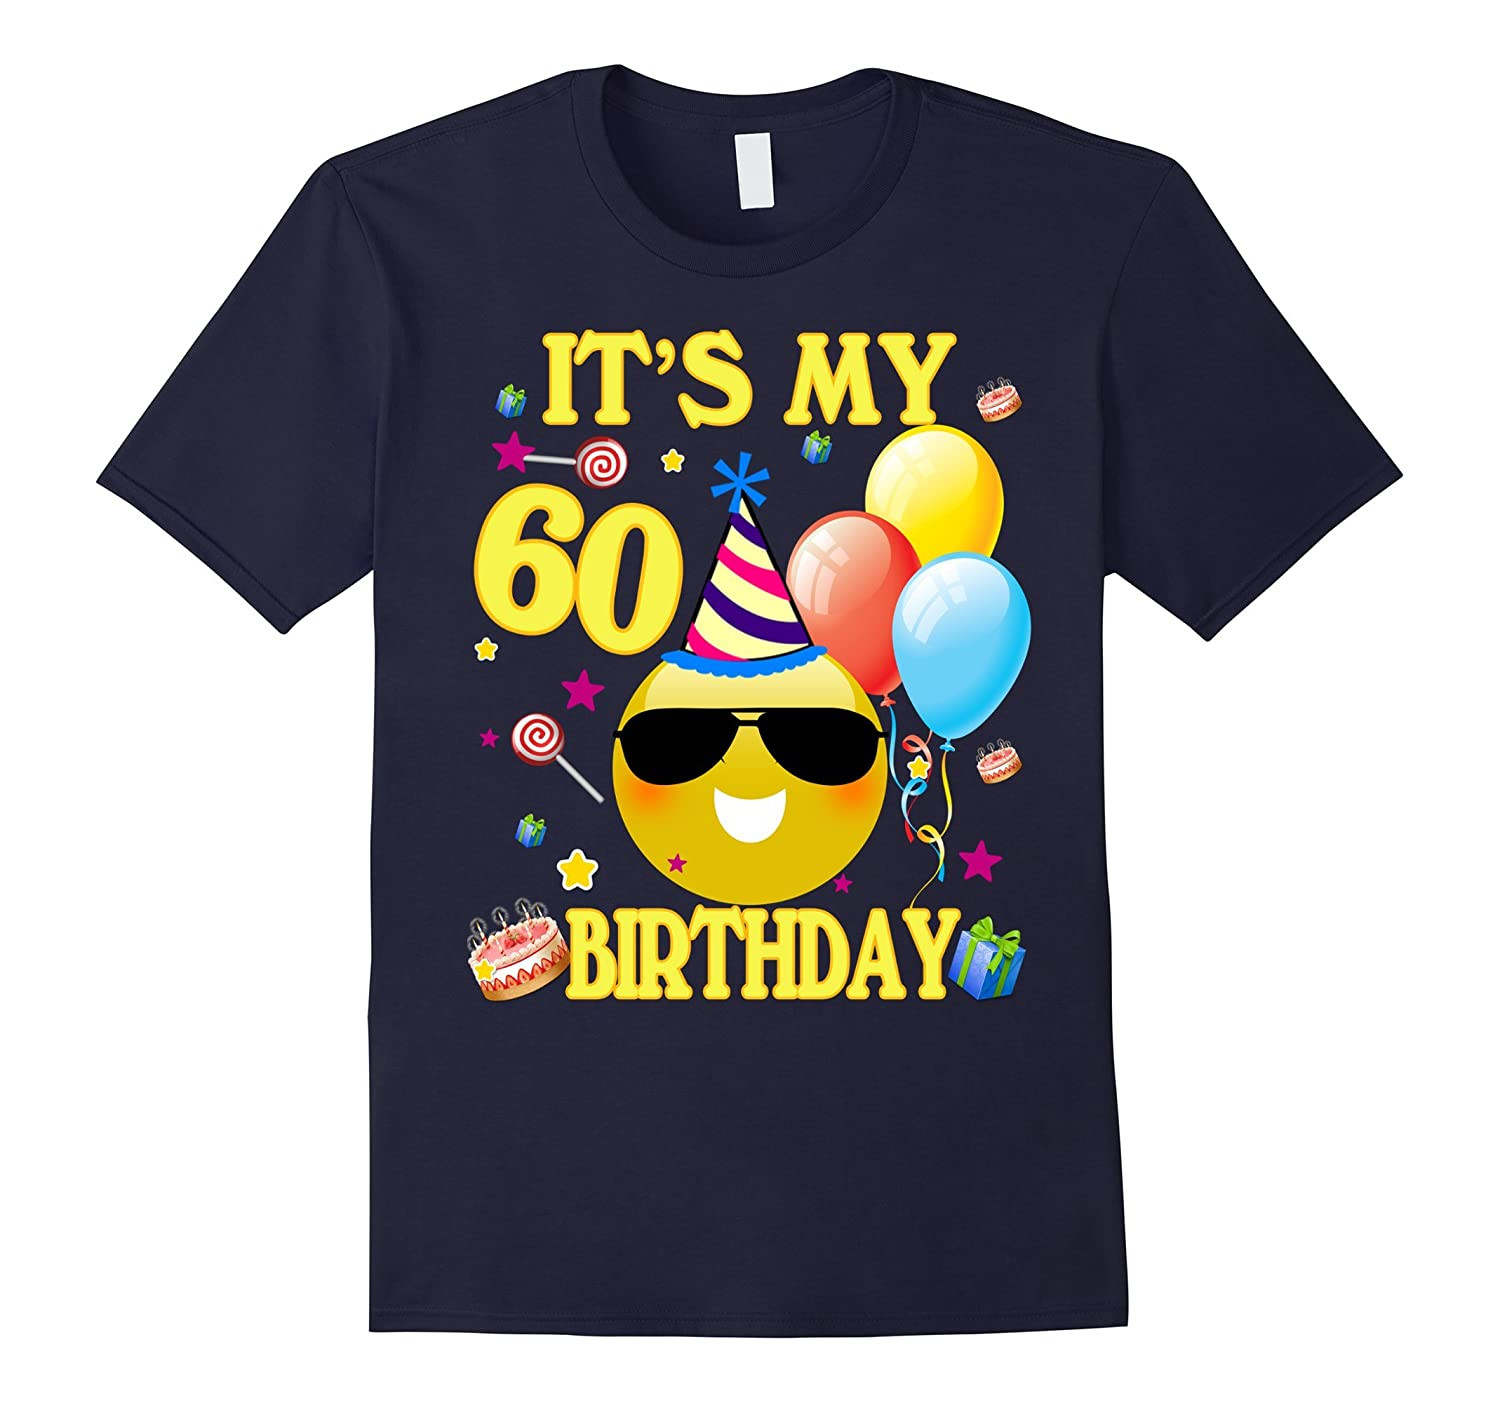 60 Year Old Birthday Gift Ideas
 It’s My 60th Birthday Shirt 60 Years Old 60th Birthday